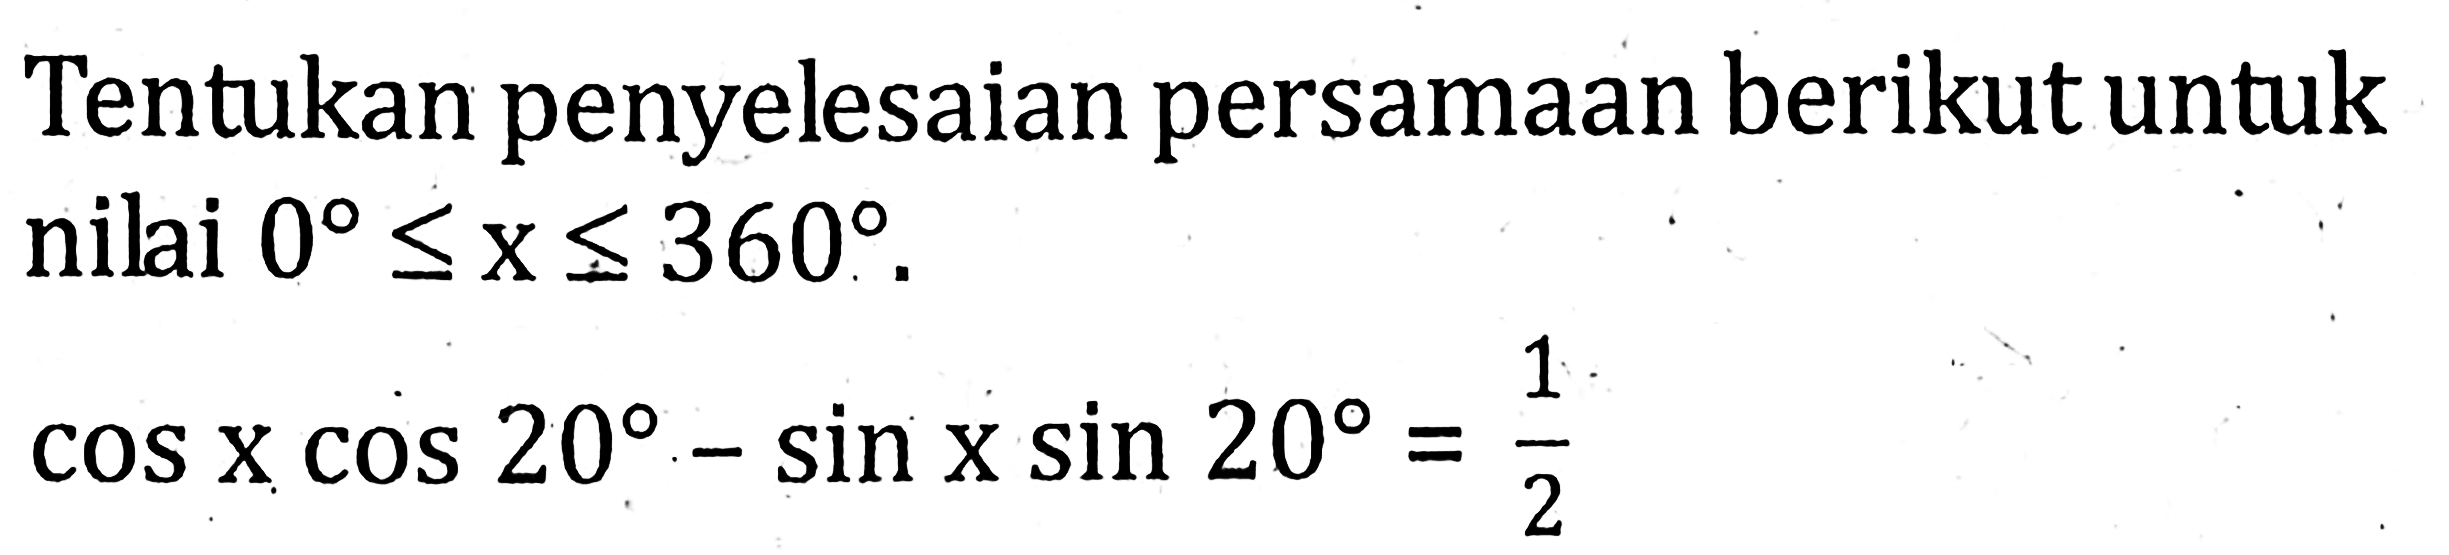 Tentukan penyelesaian persamaan berikut untuk nilai 0 <= x <= 360 . cos x cos 20 - sin x sin 20 = 1/2